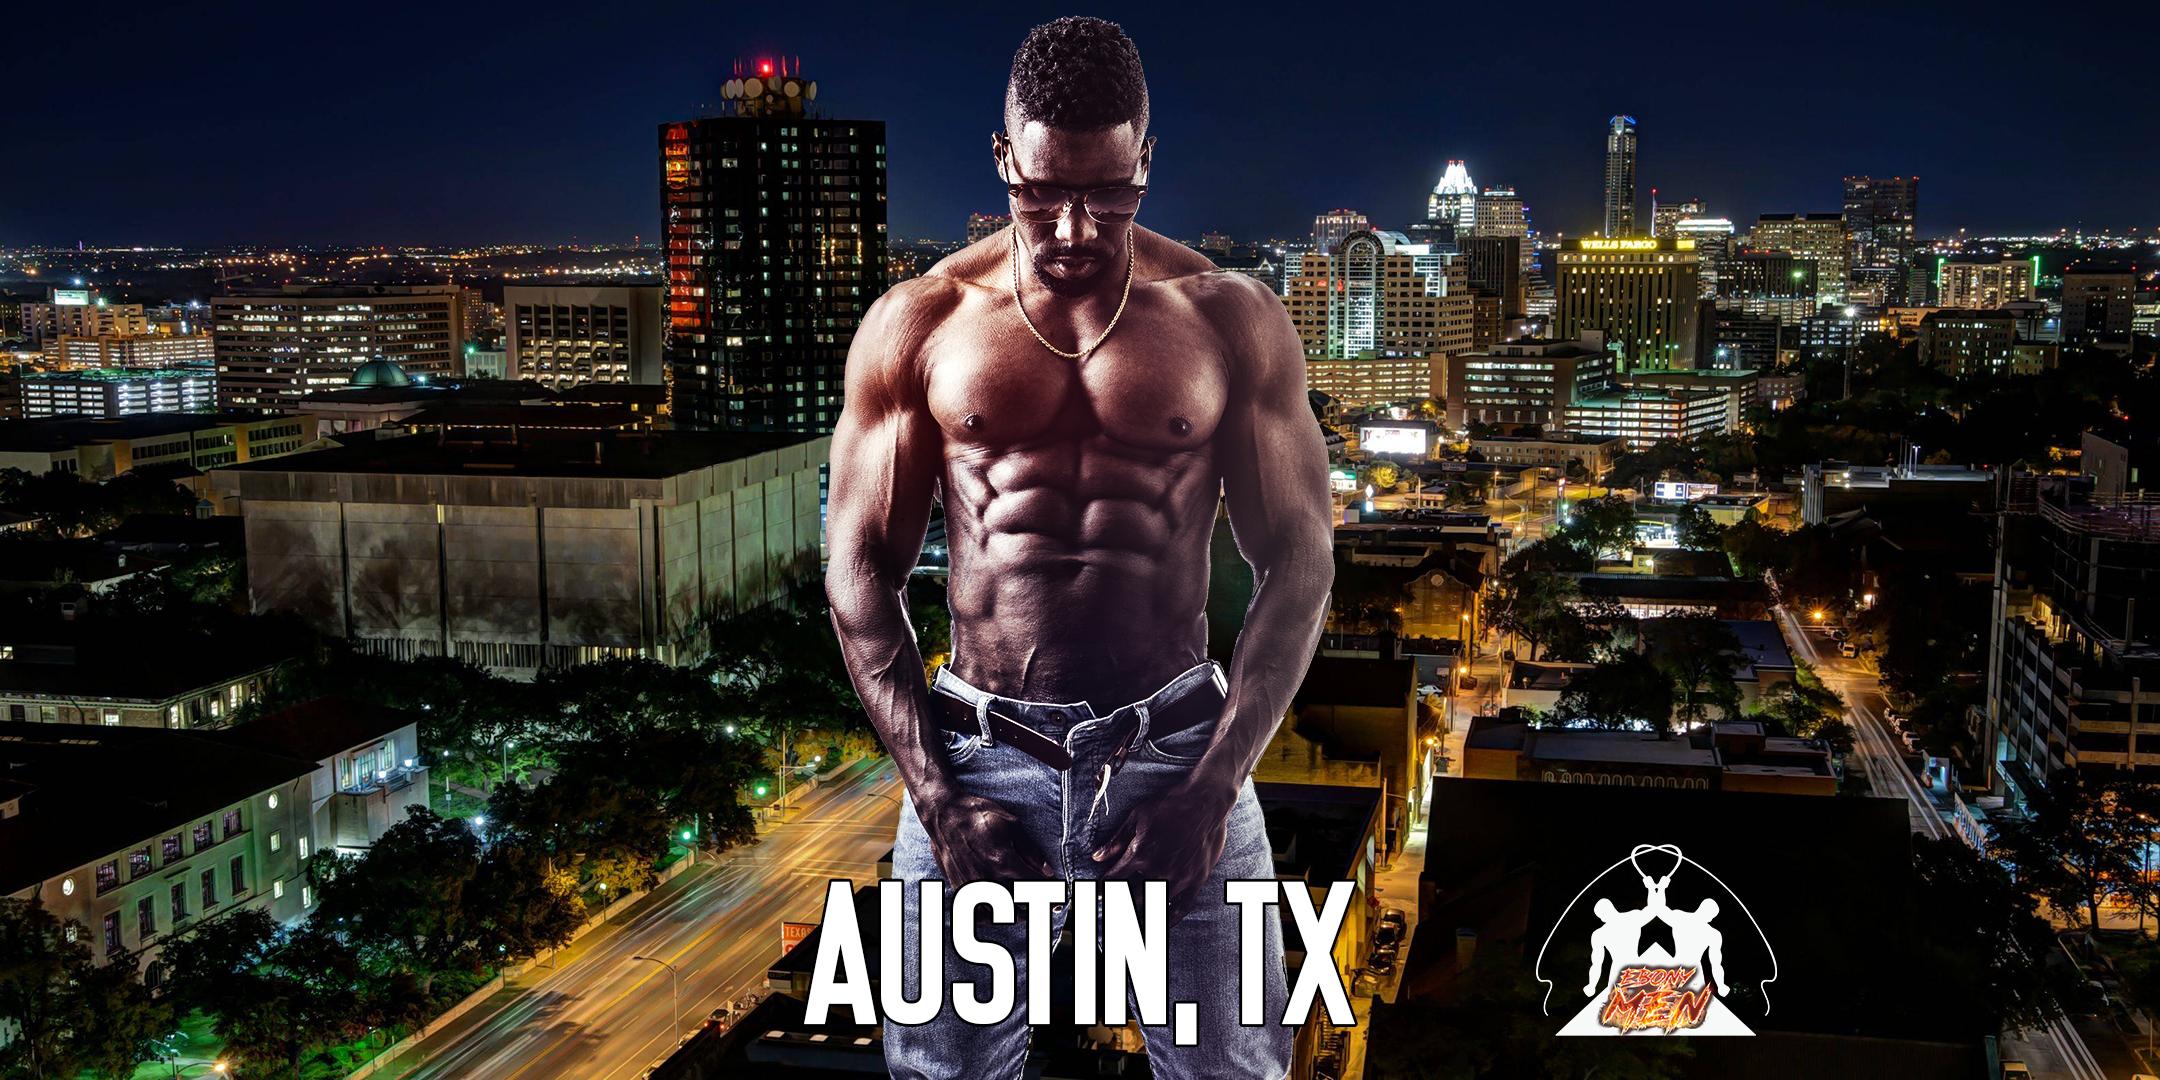 Ebony Men Black Male Revue Strip Clubs & Black Male Strippers Austin TX NC 8-10PM